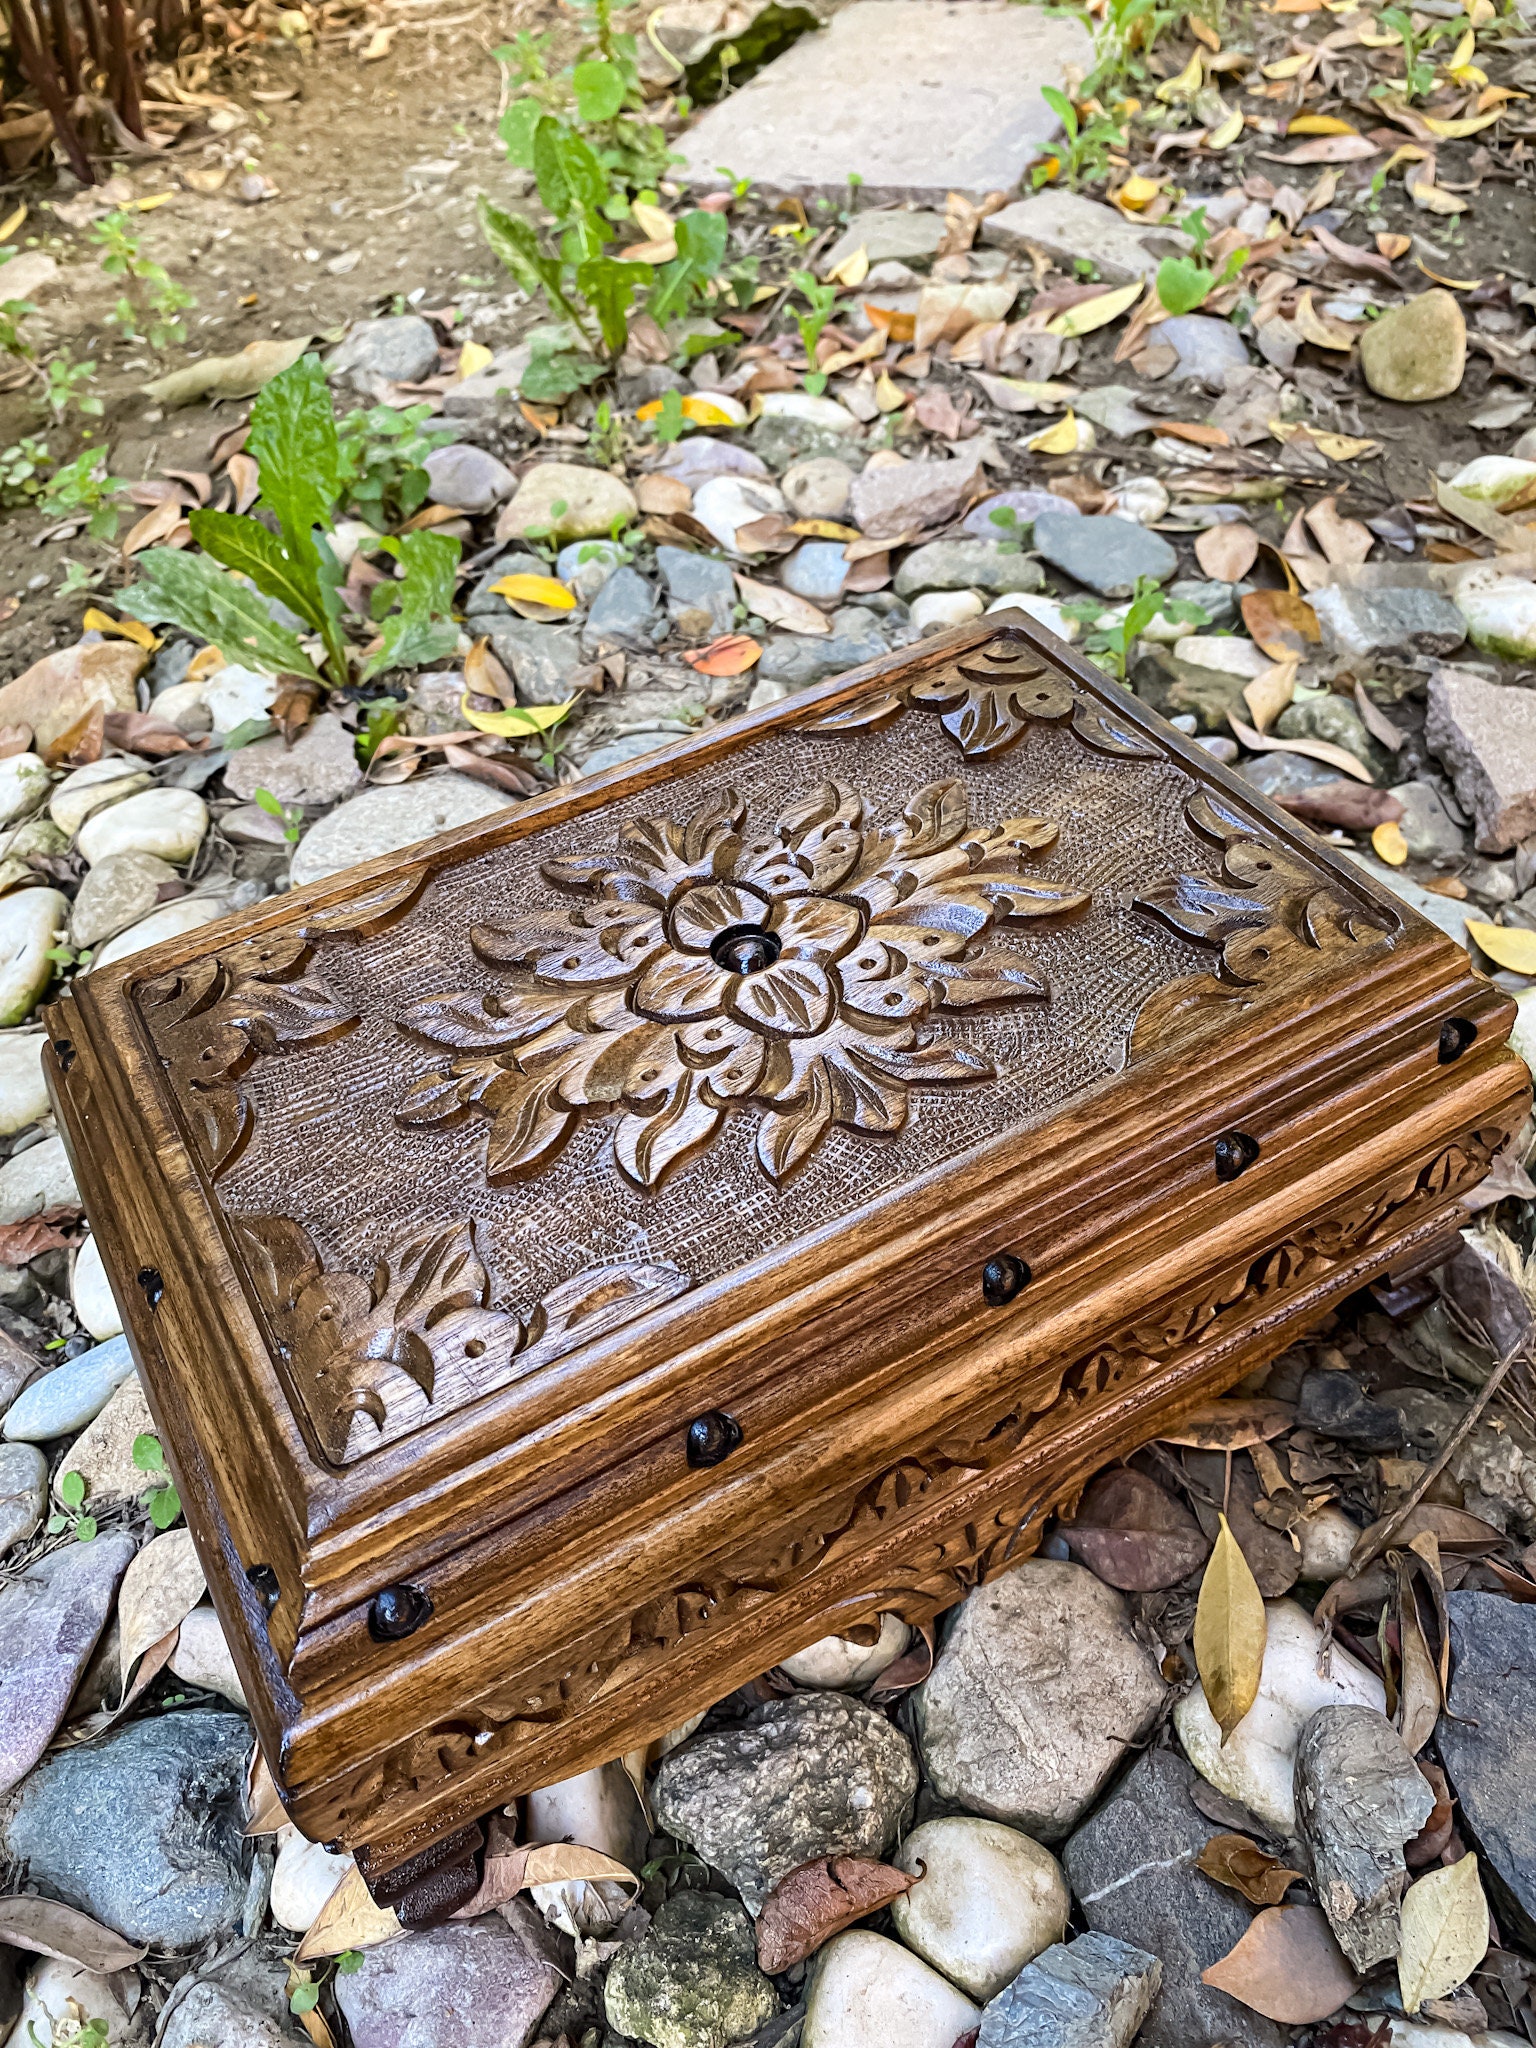 Personalized Wooden Jewelry Box With Lock, Secret Lock Box With Key,  Treasure Chest, Walnut Treasure Chest 